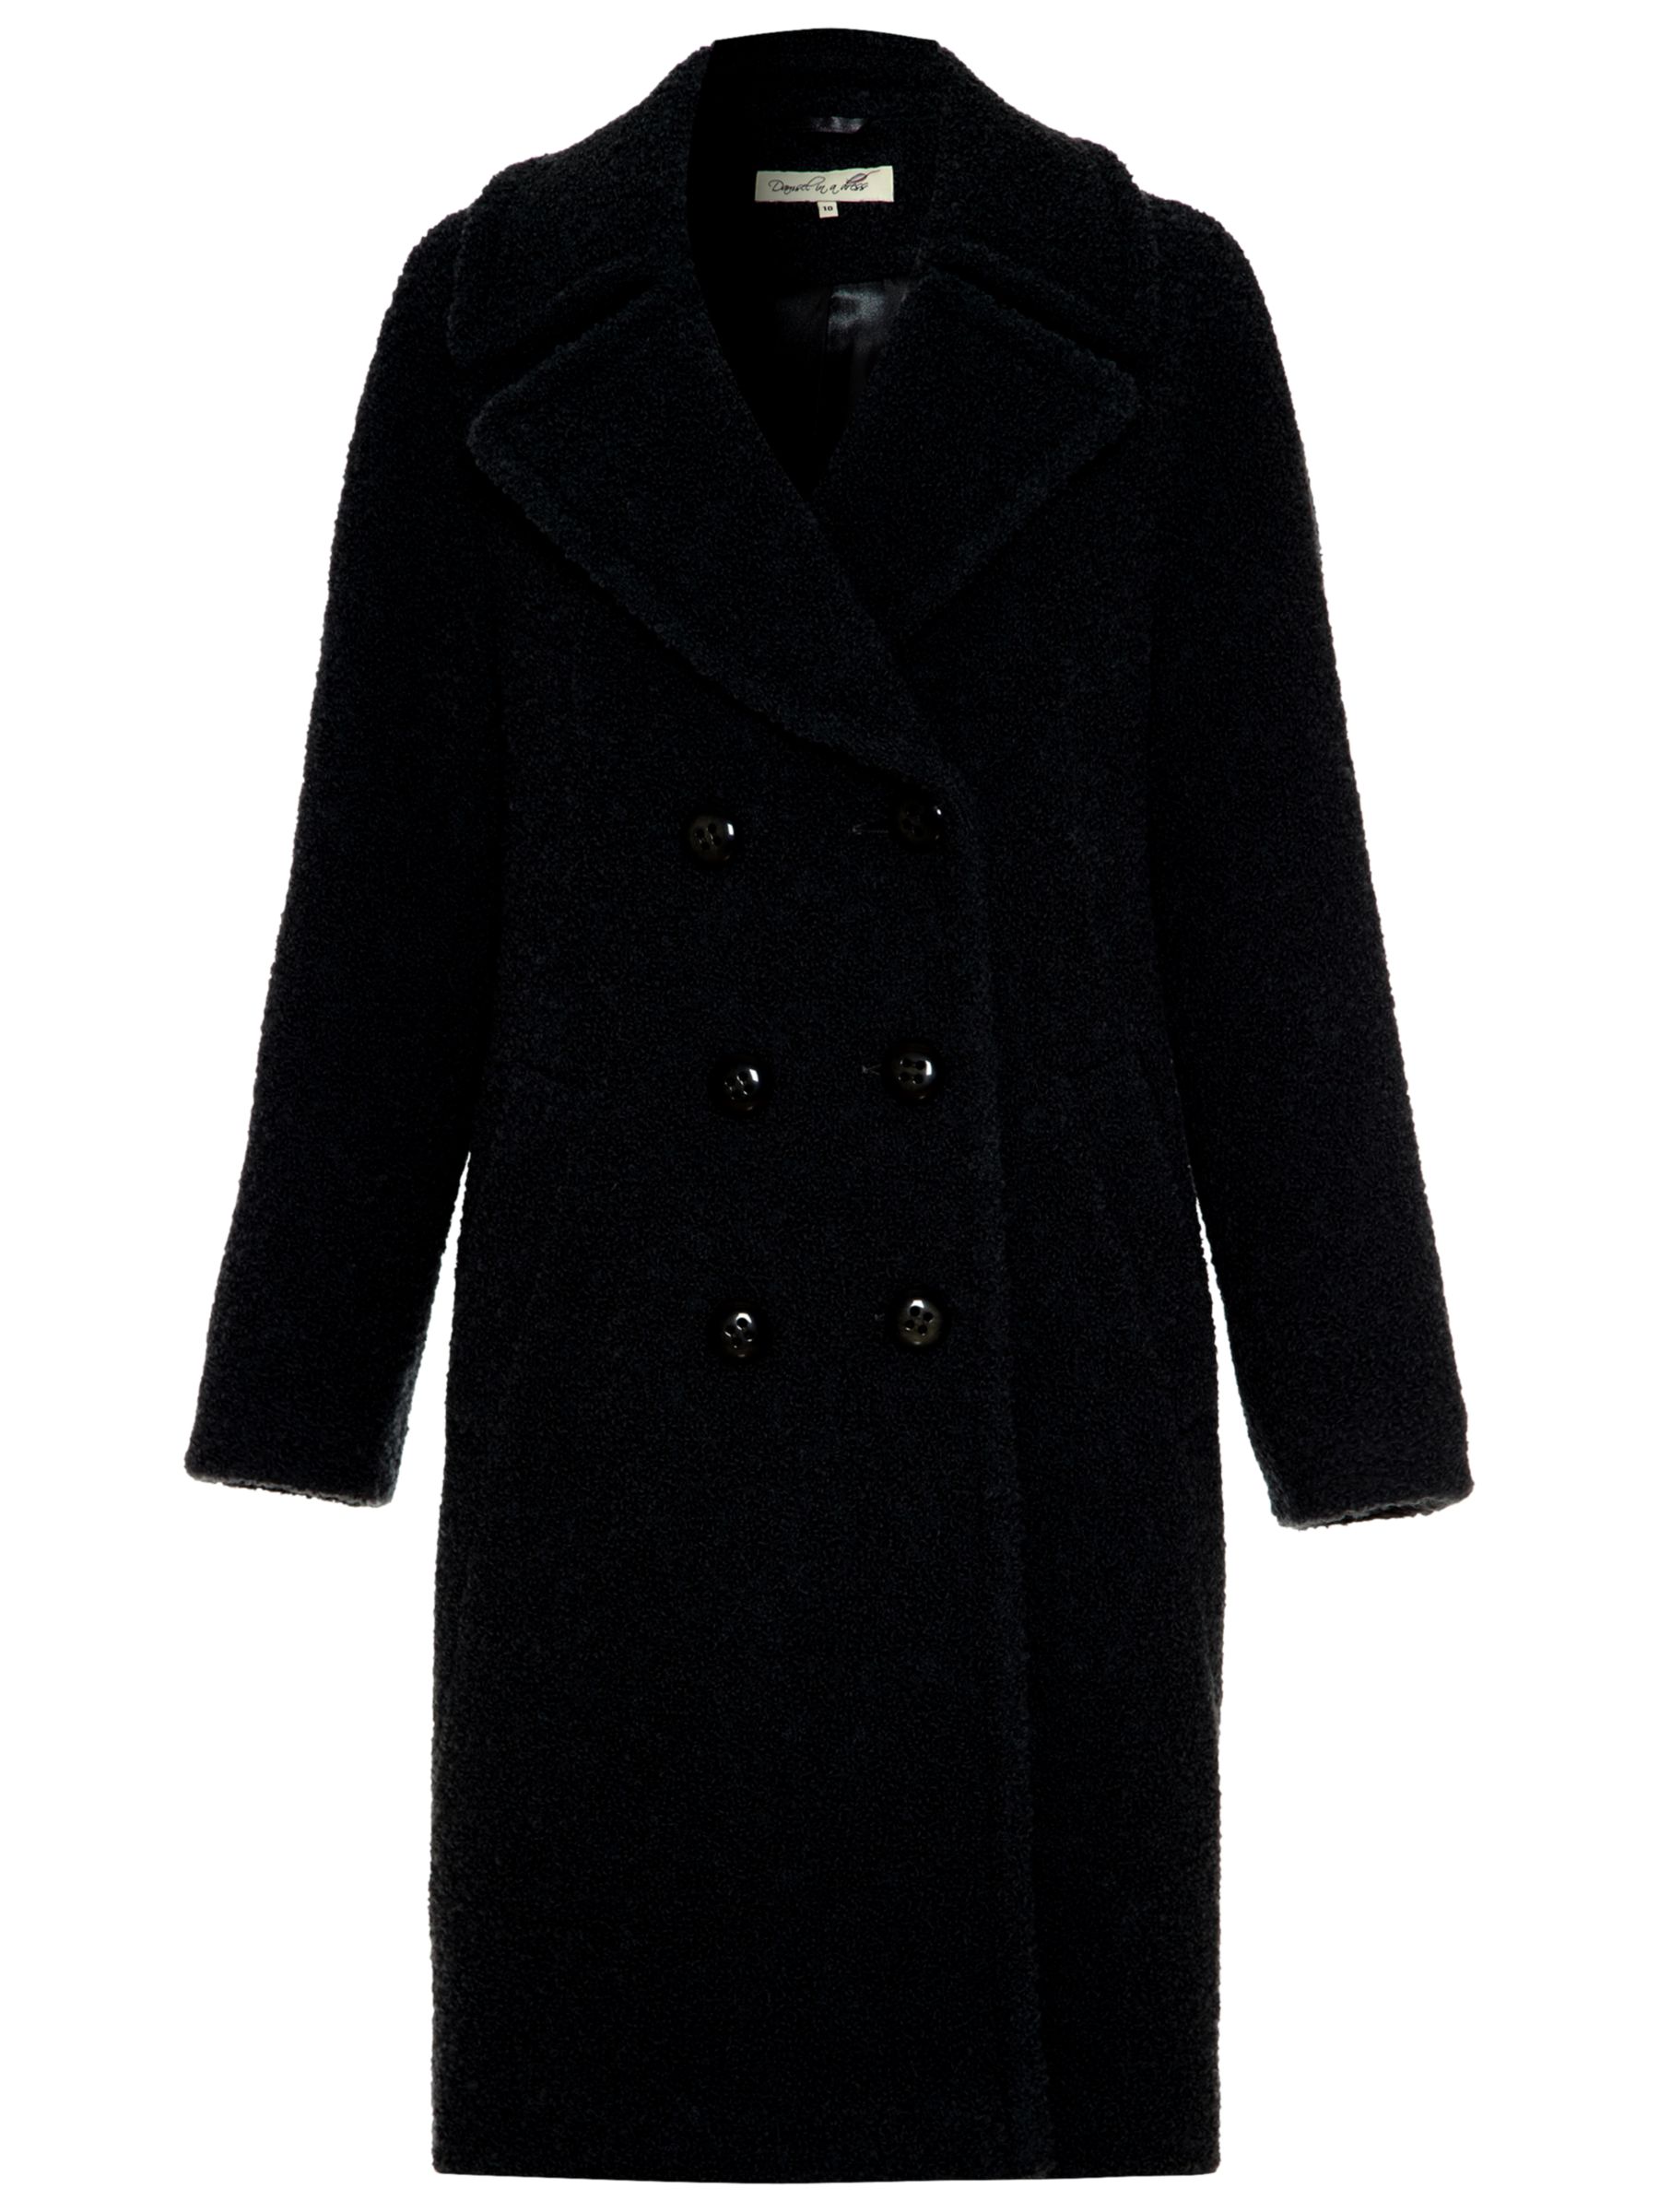 Damsel in a dress Charlecote Coat, Black